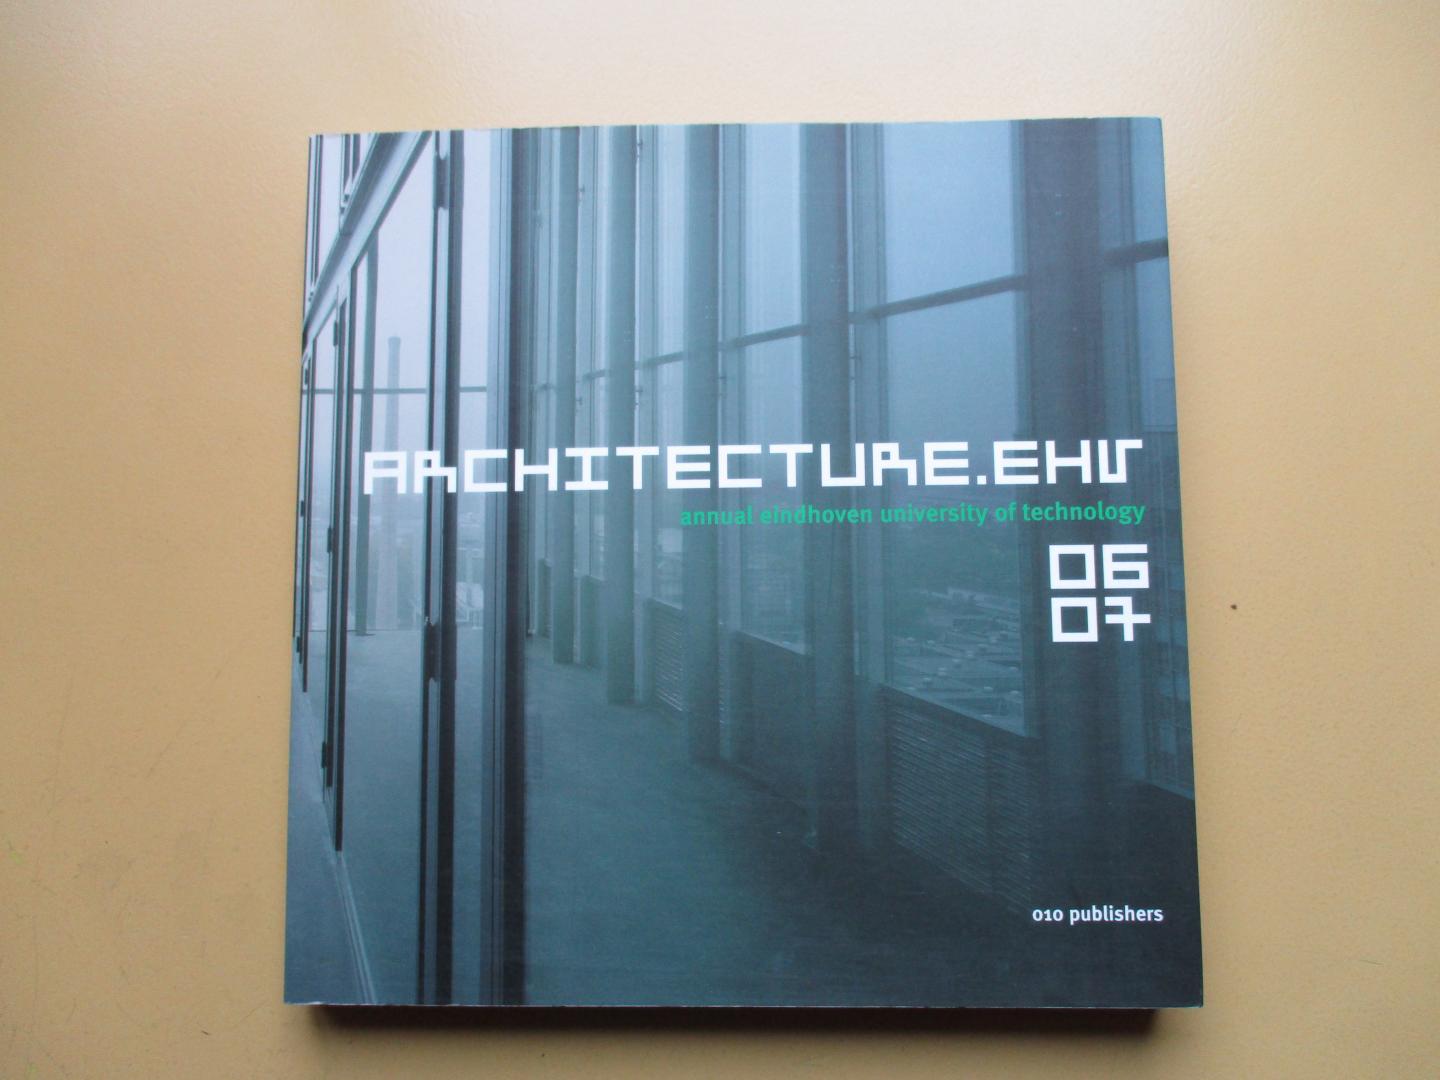 Bosman, Jos e.a. (samenst. en redactie) - Architecture.ehv 06 07 - Annual Eindhoven University of Technology